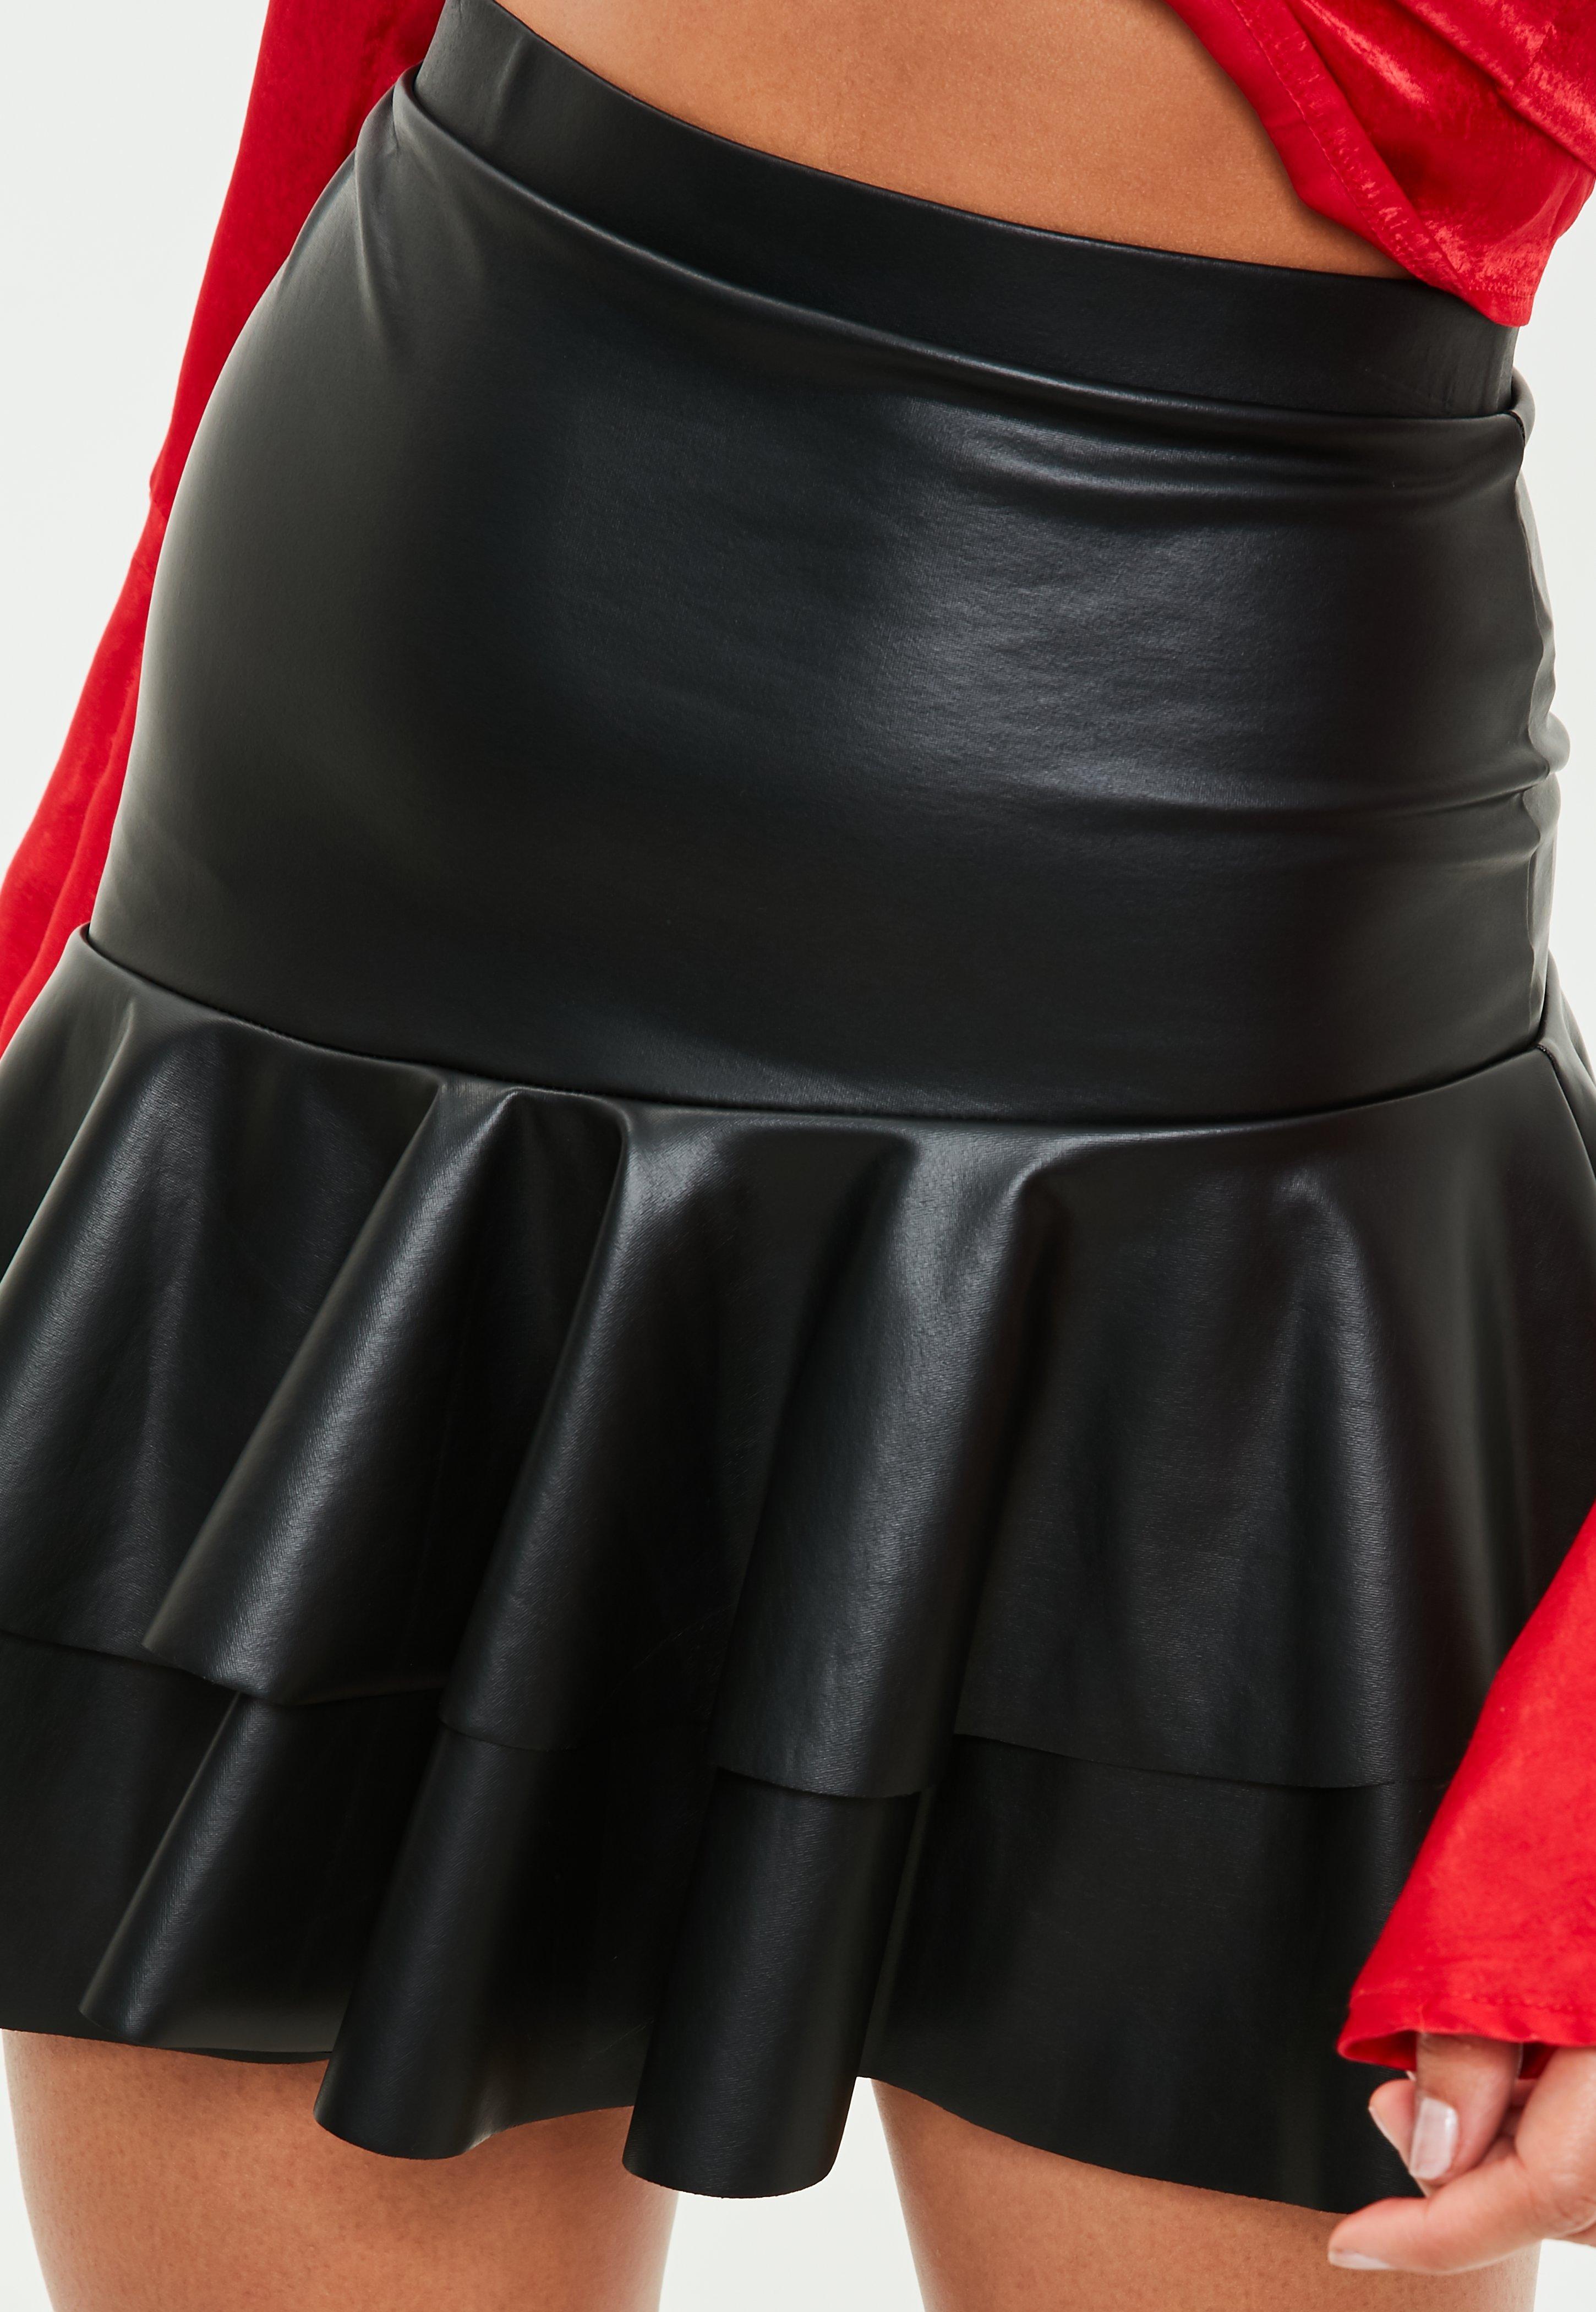 Missguided Black Frill Asymmetric Faux Leather Mini Skirt - Lyst